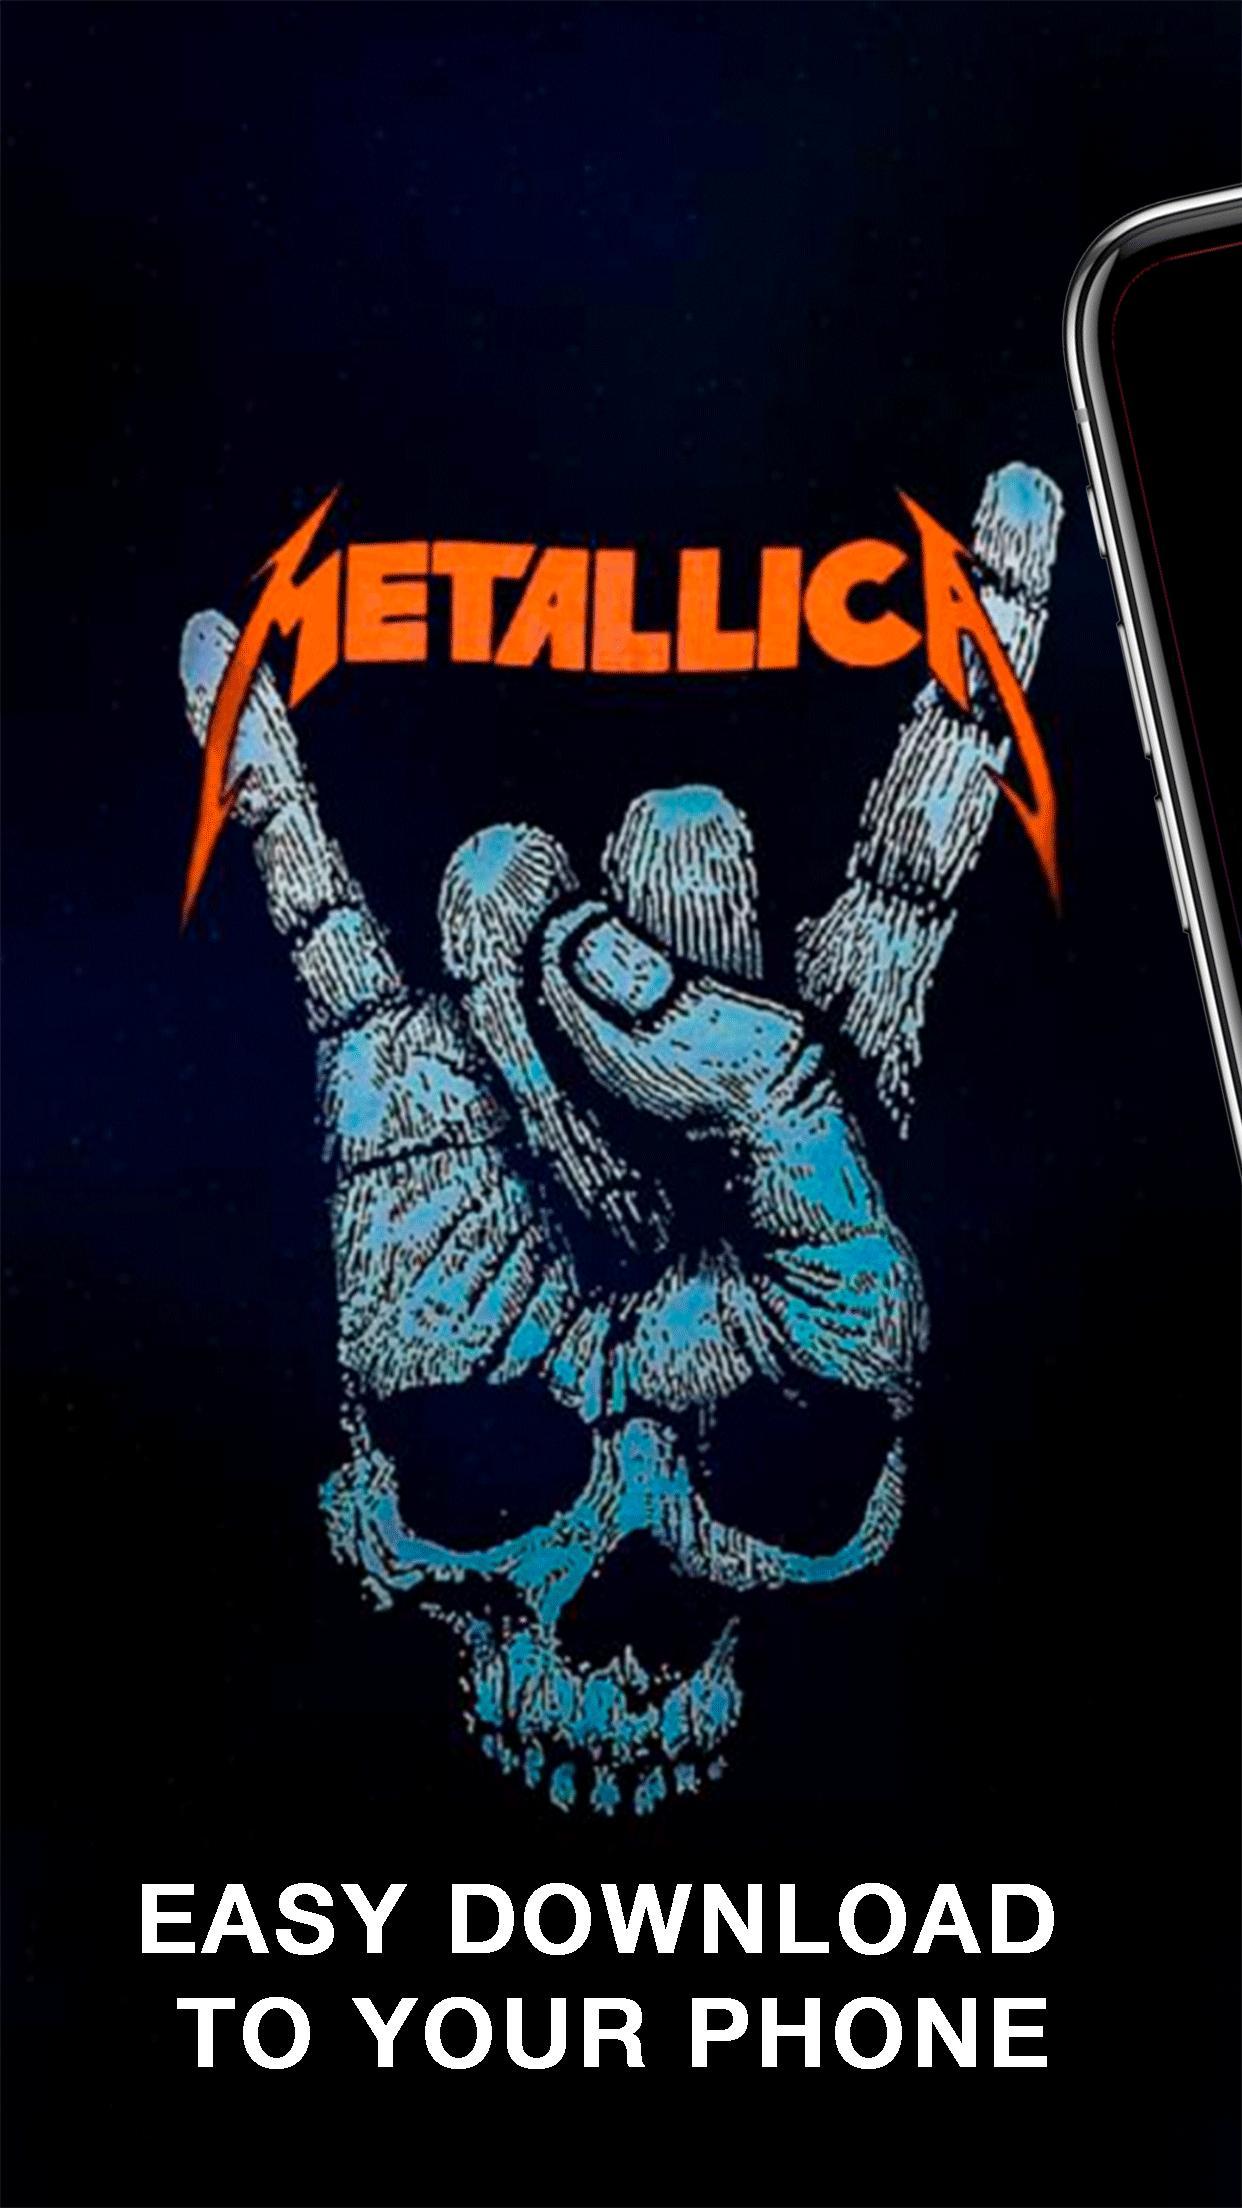 Metallica [3] wallpaper - Music wallpapers - #28483